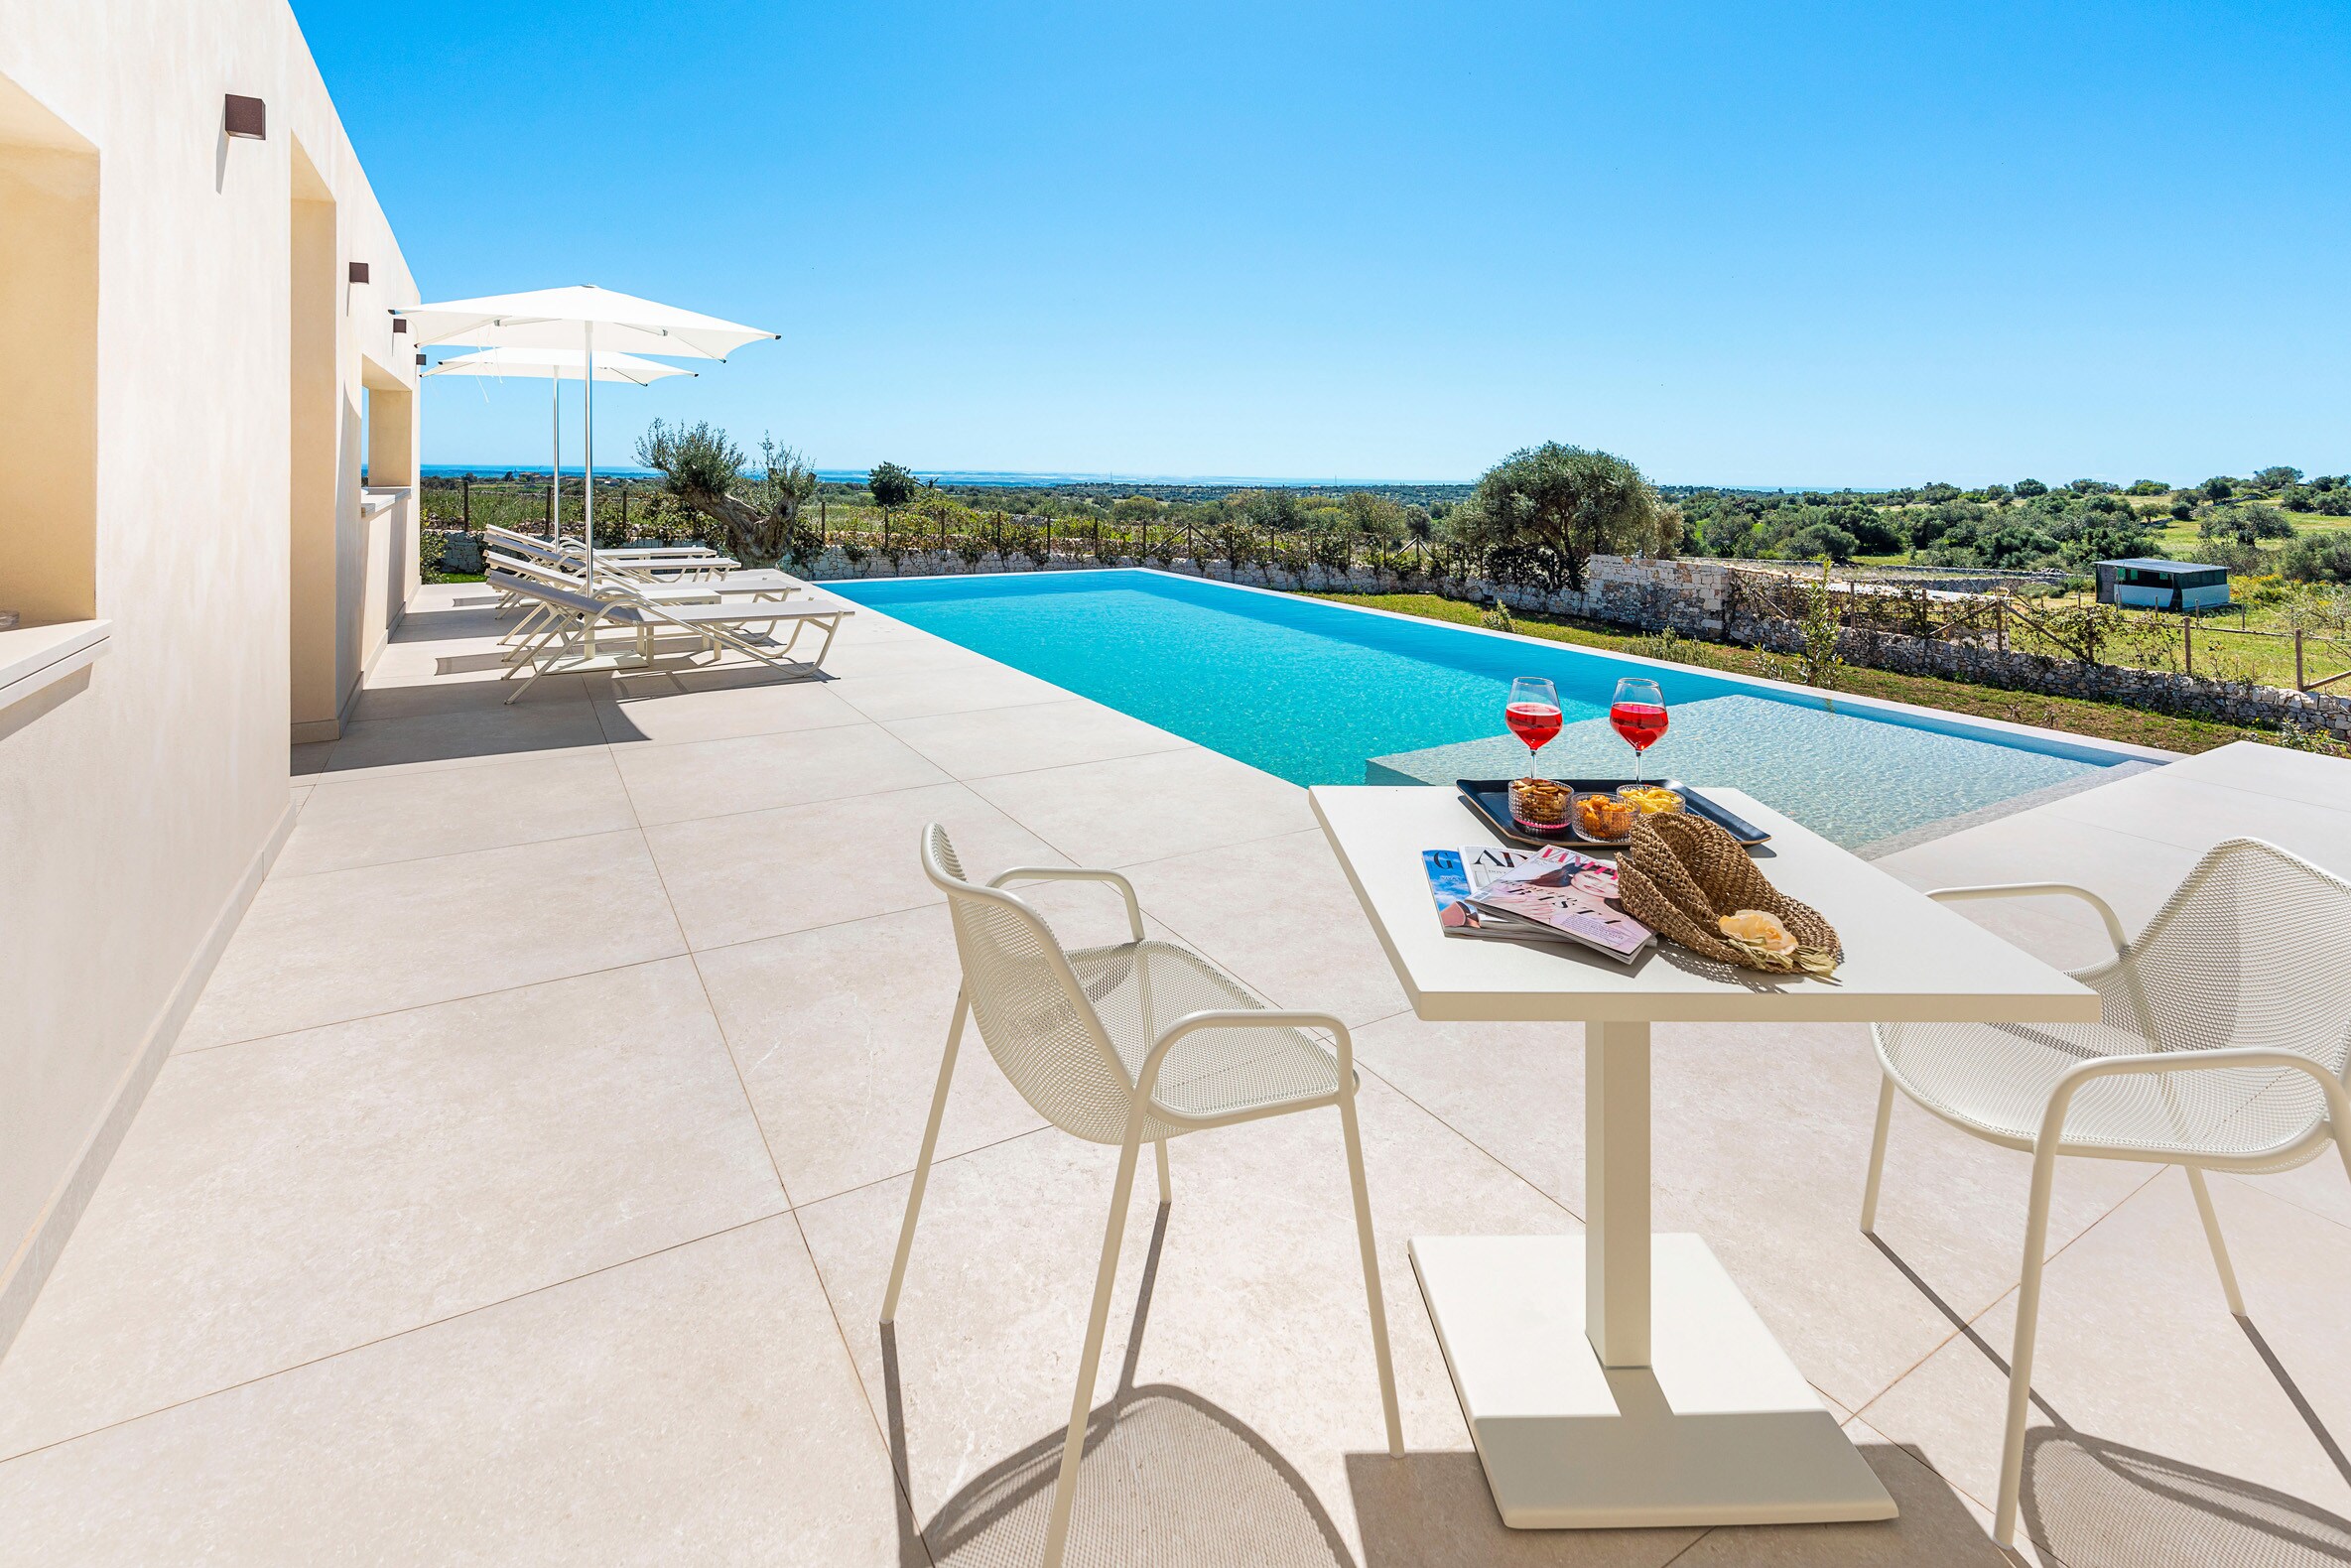 Mediterranean modern villa with infinity pool﻿